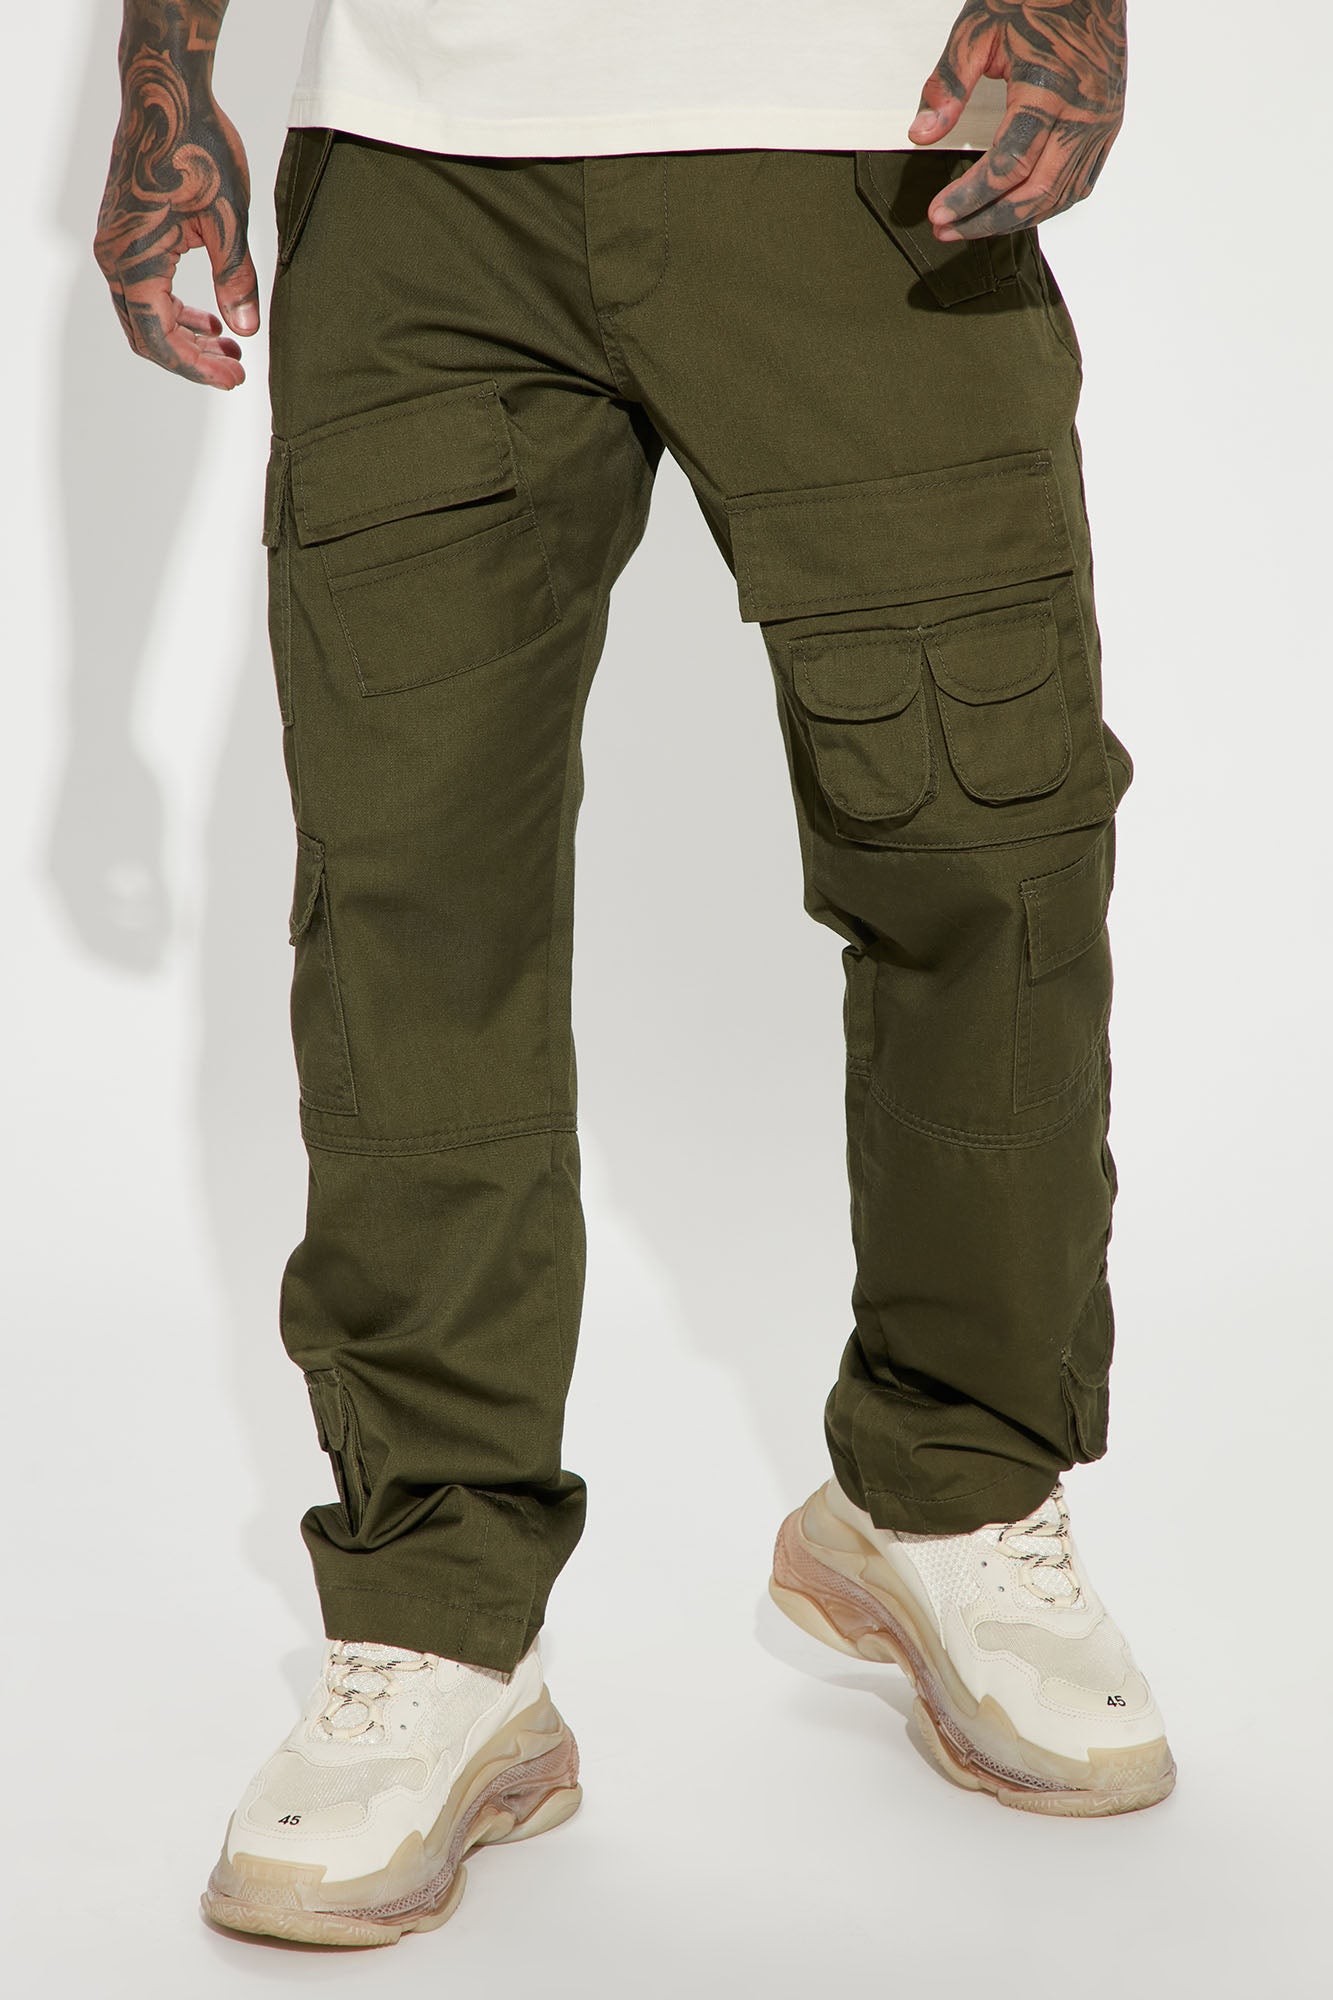 Green Cargo Pants Outfit @fashionnova.com  Cargo pants outfit, Green cargo  pants outfit, Green cargo pants